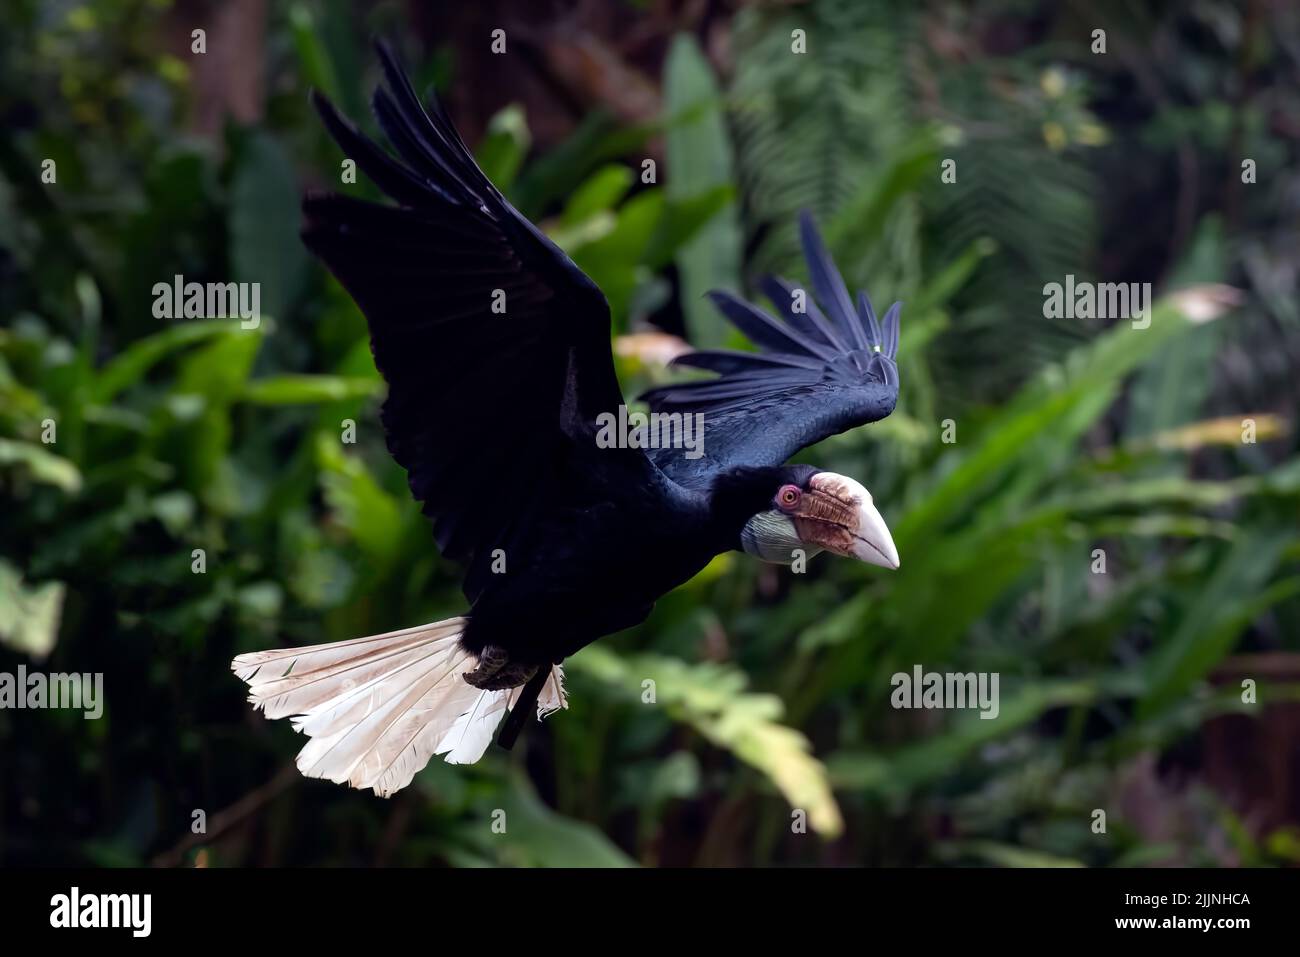 Close-Up of a hornbill bird in flight in jungle, Indonesia Stock Photo